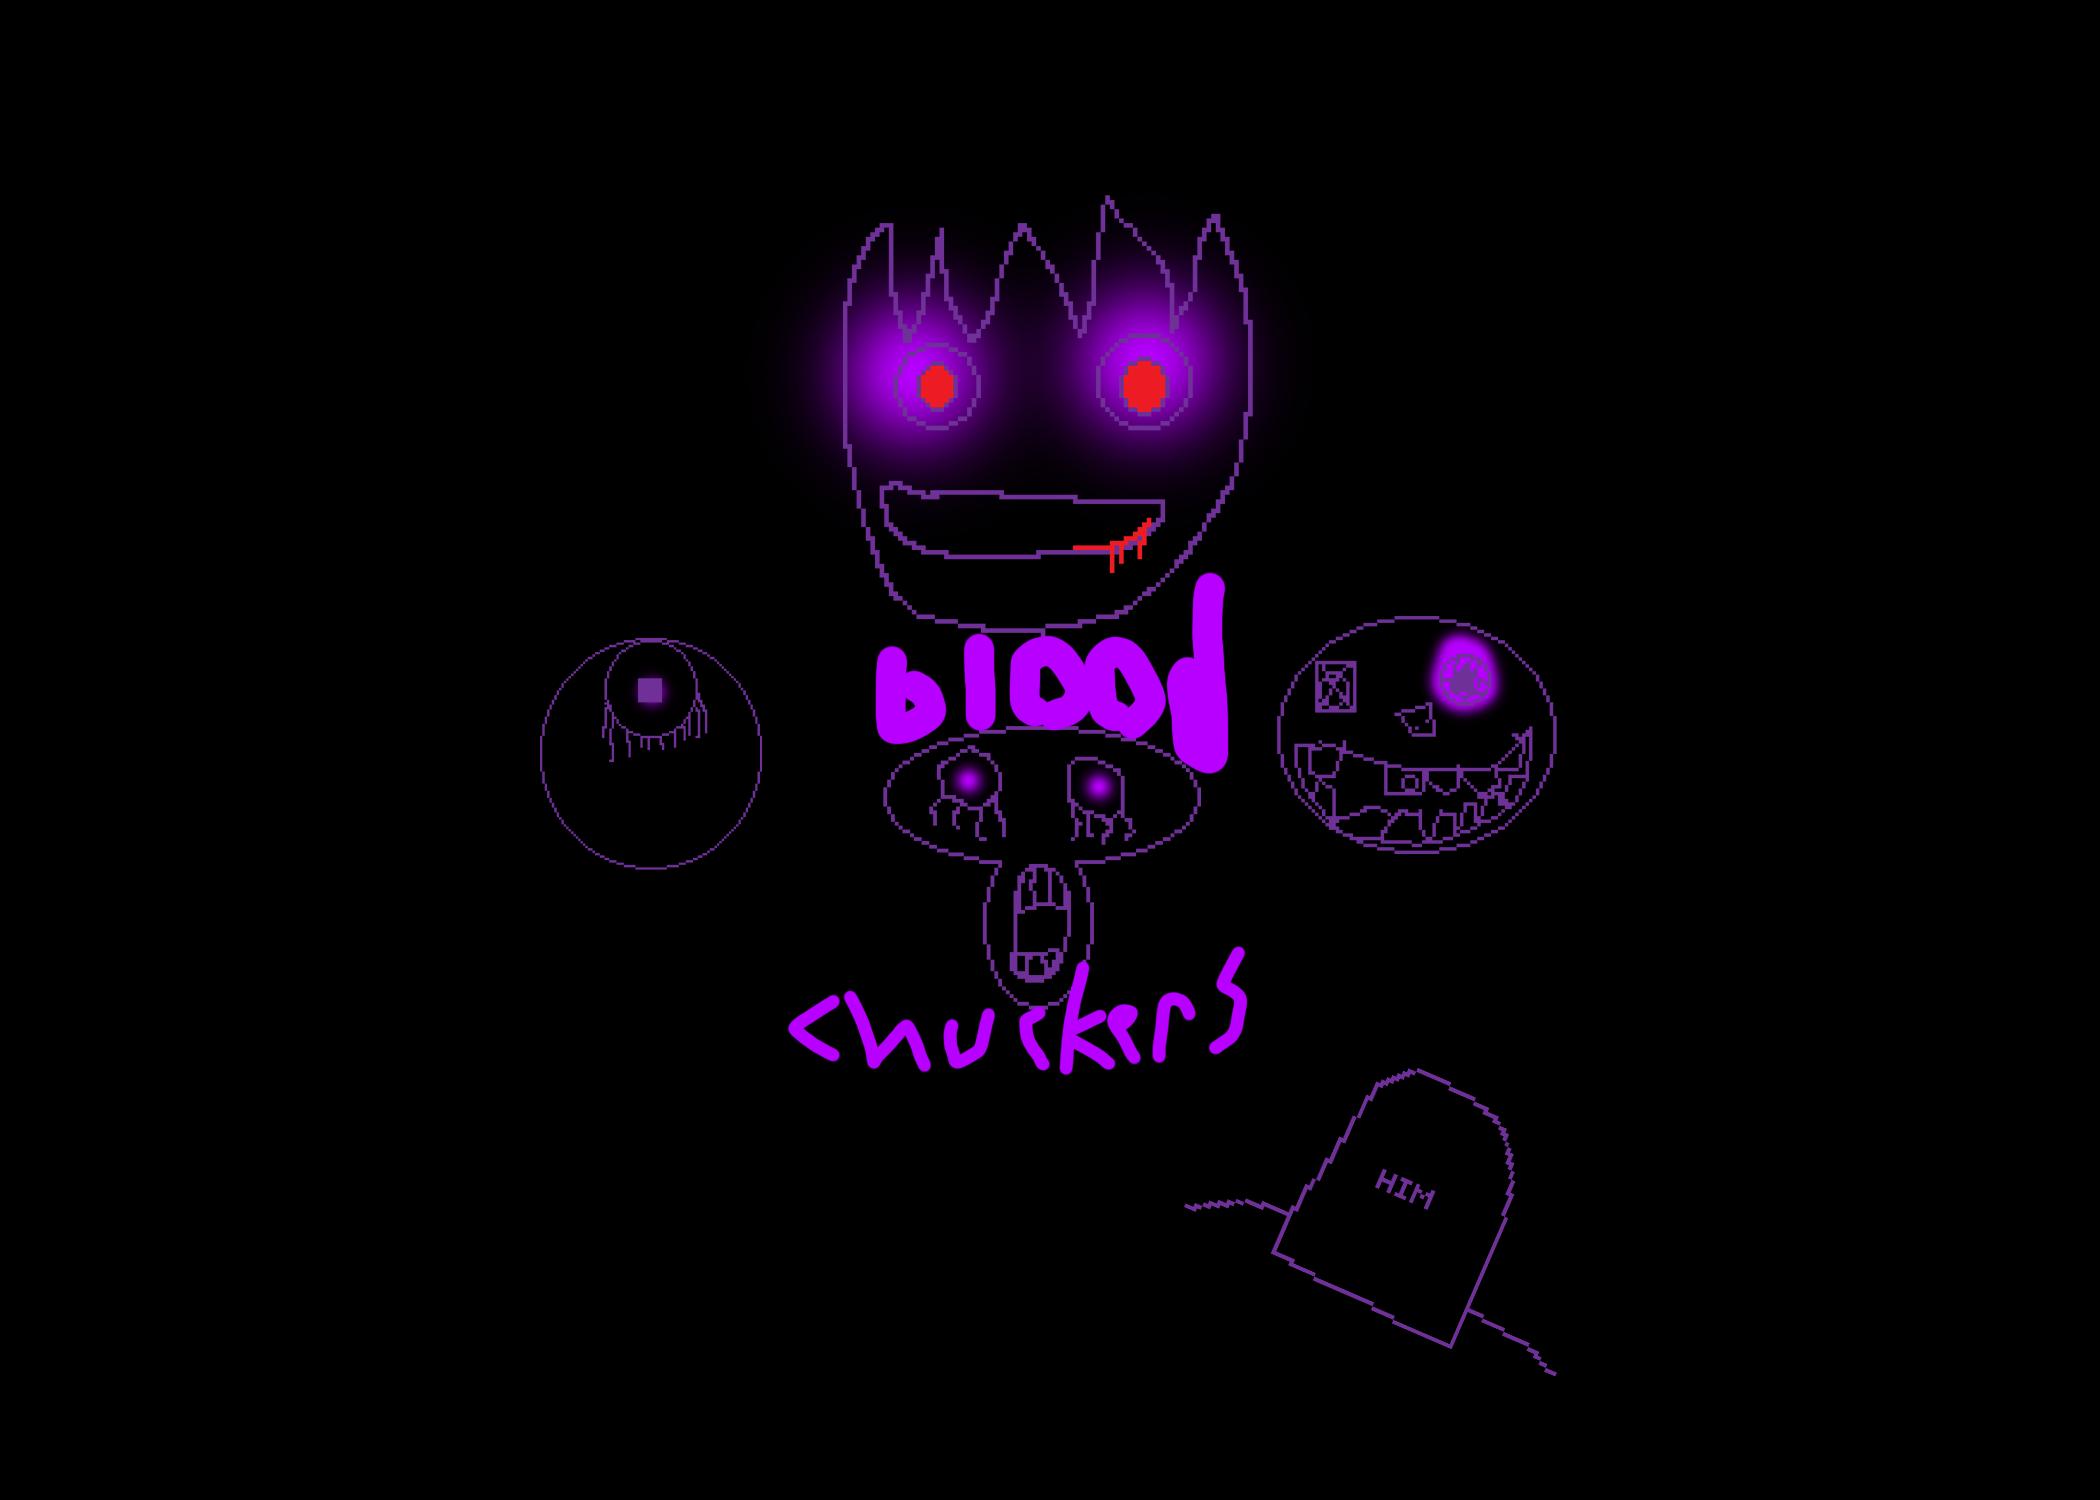 Blood chuckers